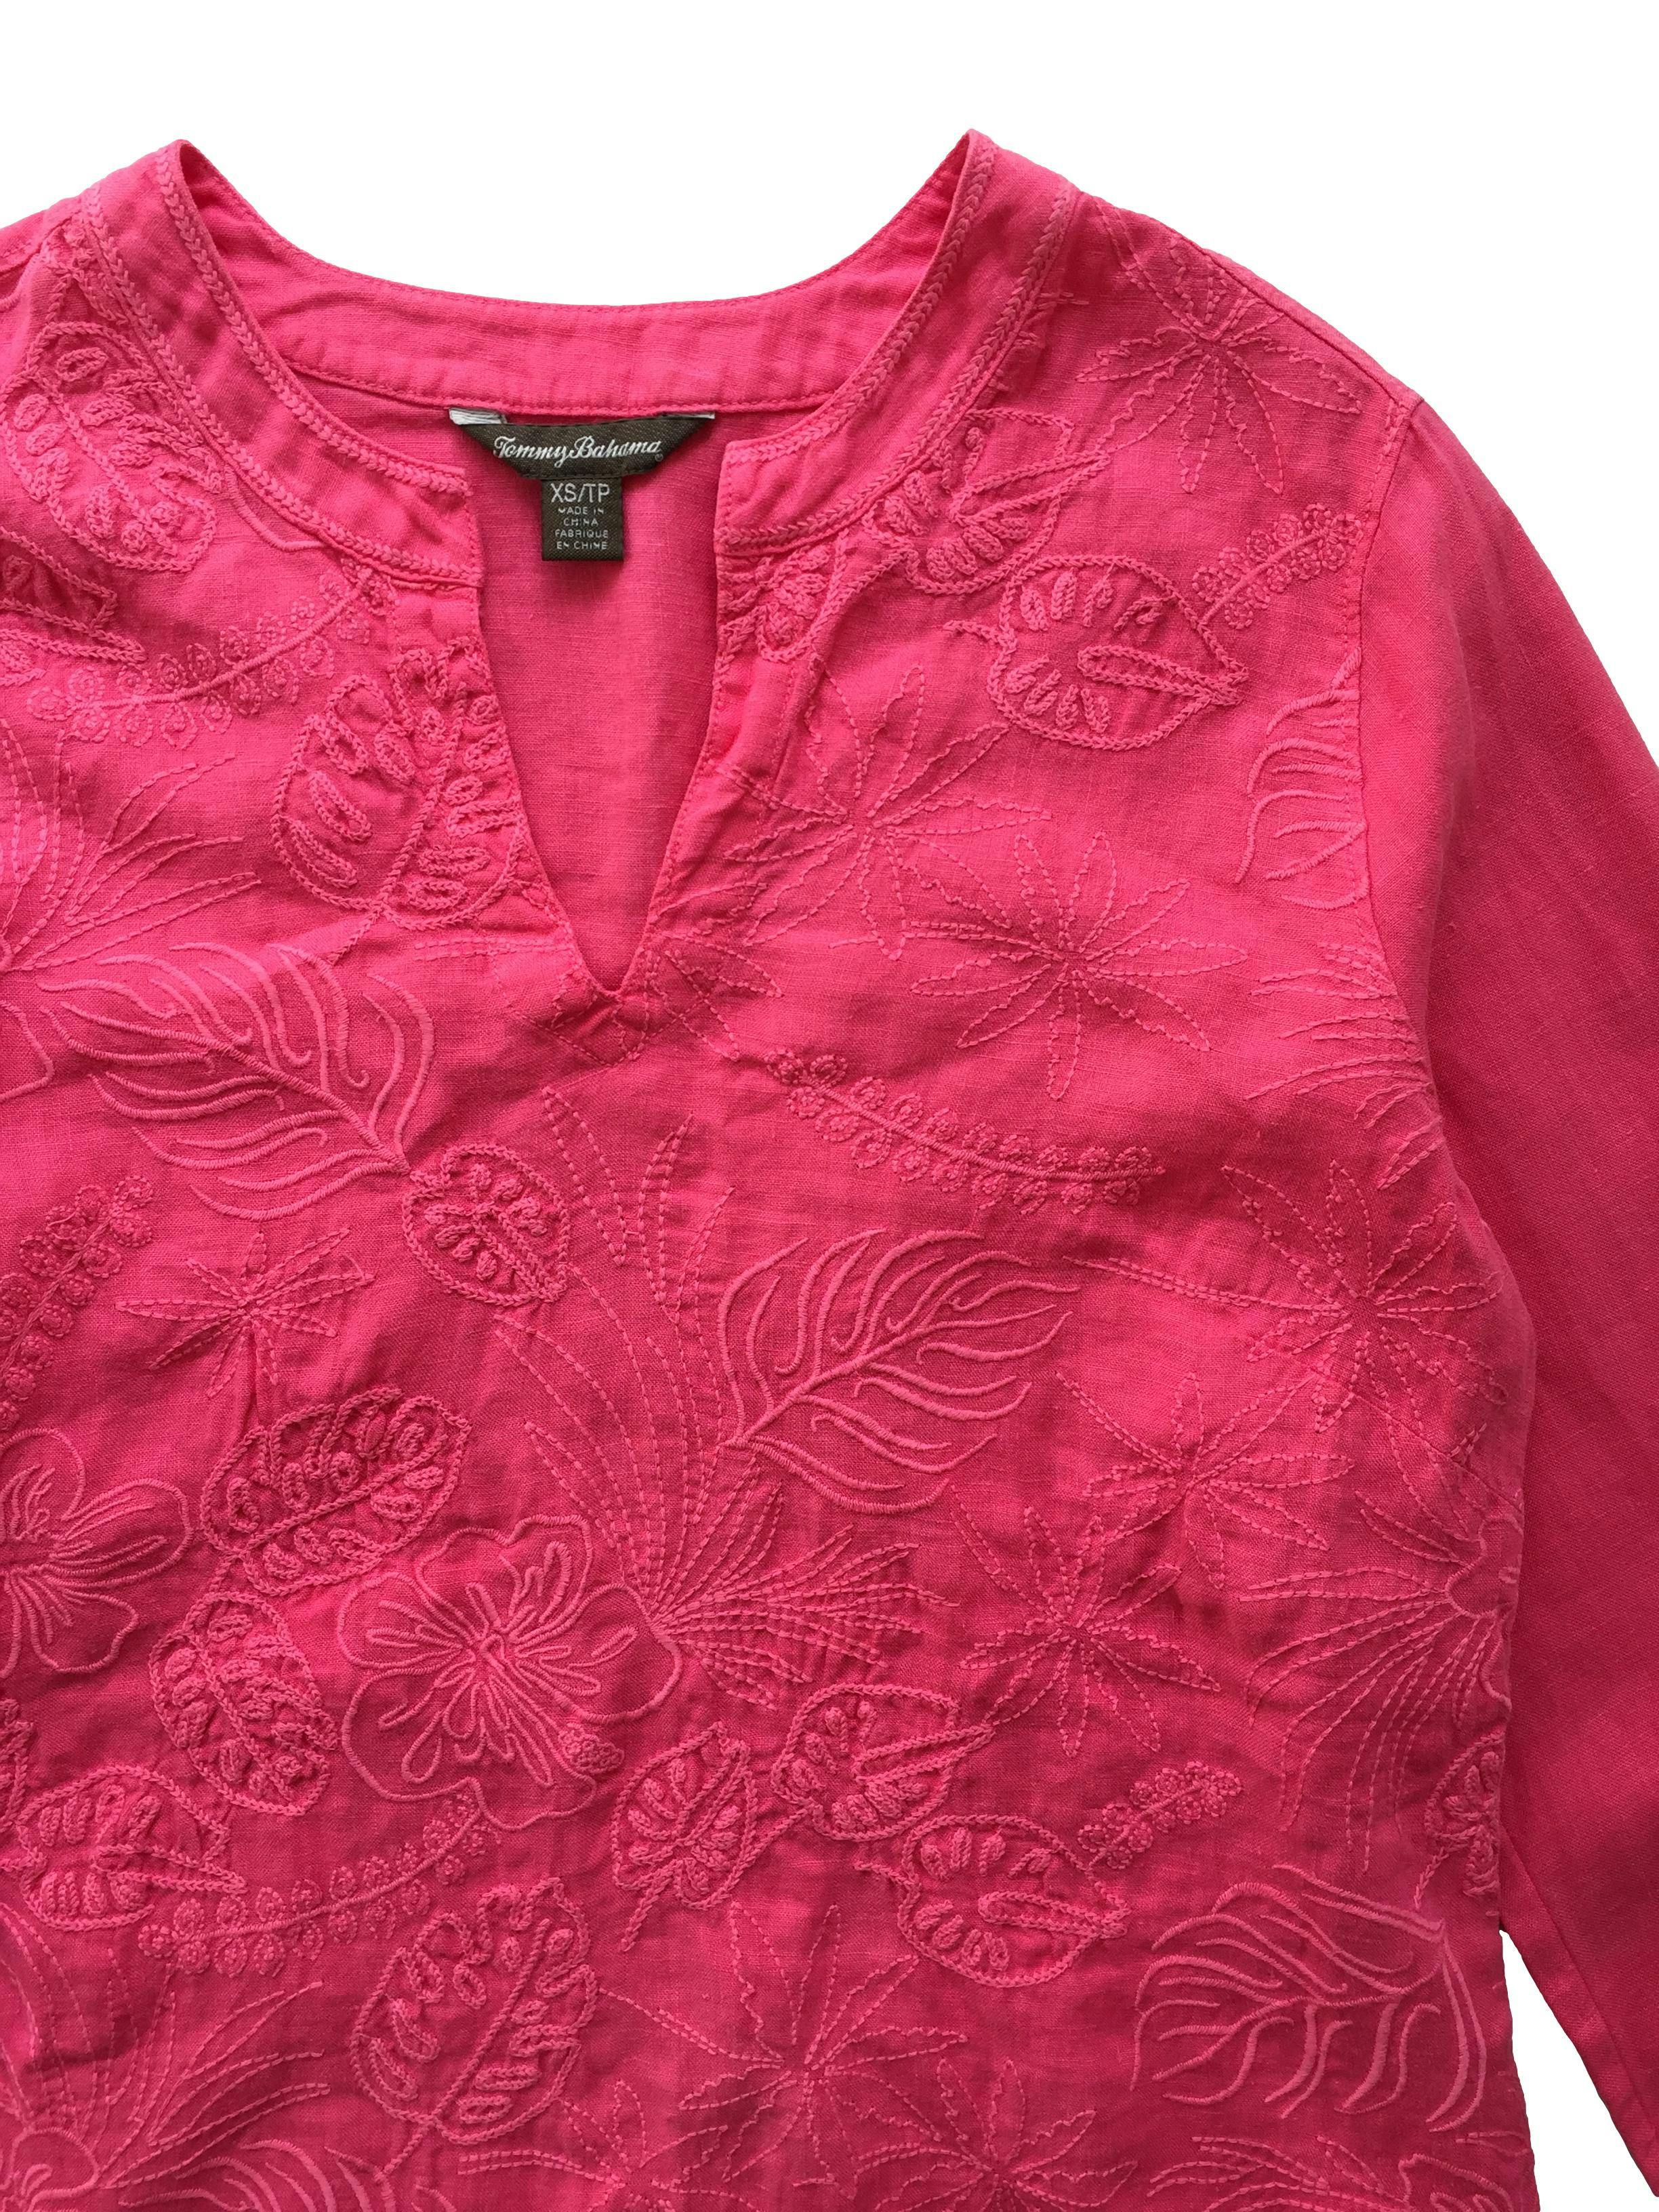 Blusa Tommy Bahama manga larga rosado con bordado de flores, aberturas laterales. Busto: 94cm, Largo: 67cm.